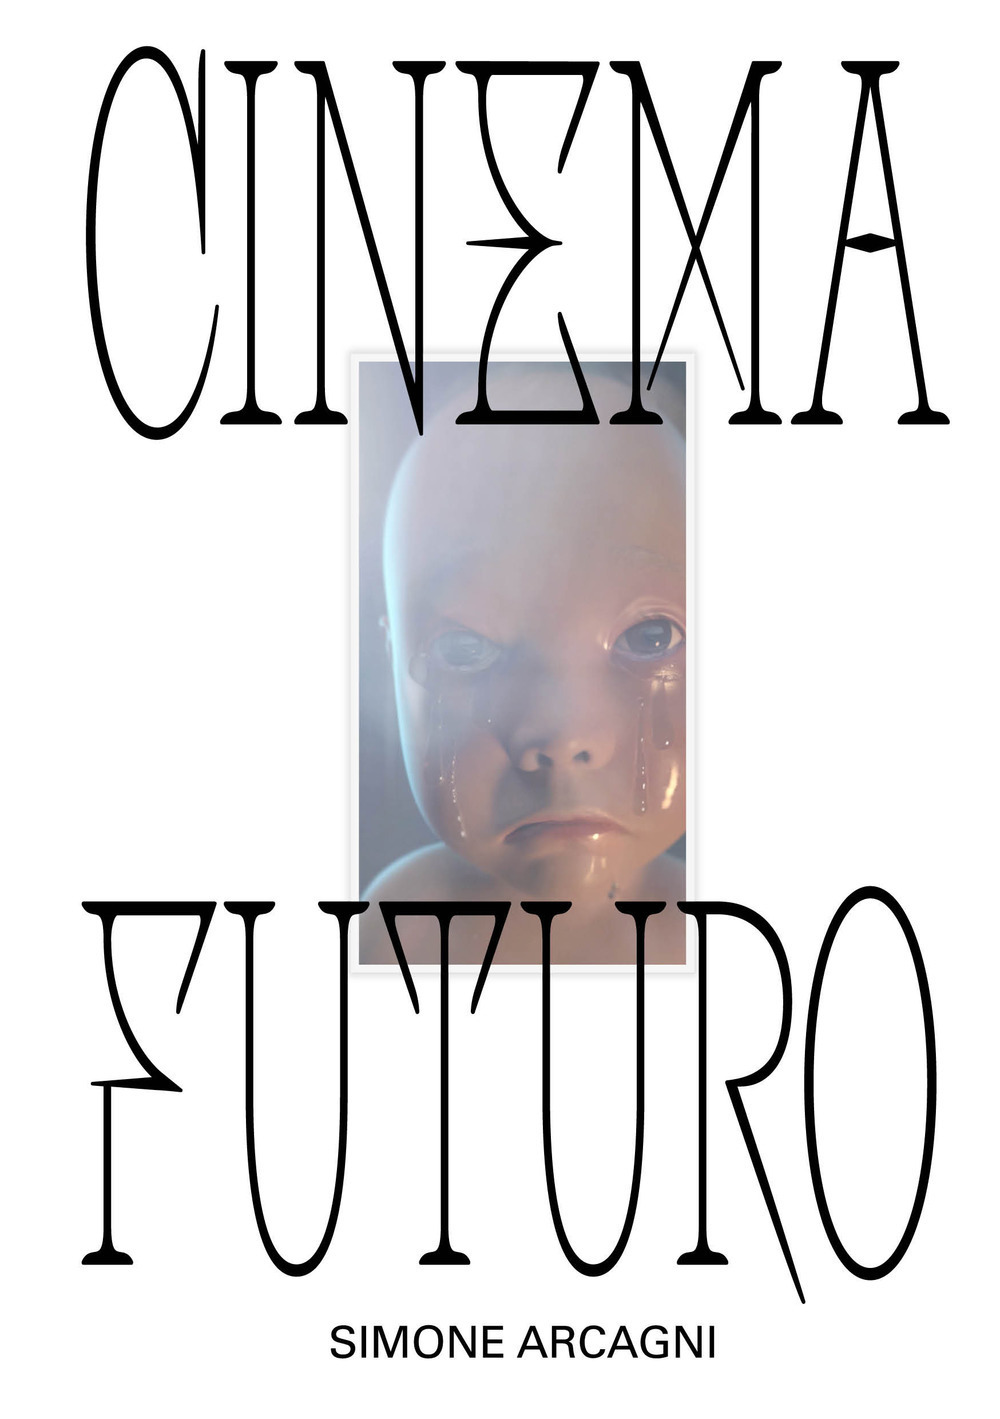 Cinema futuro